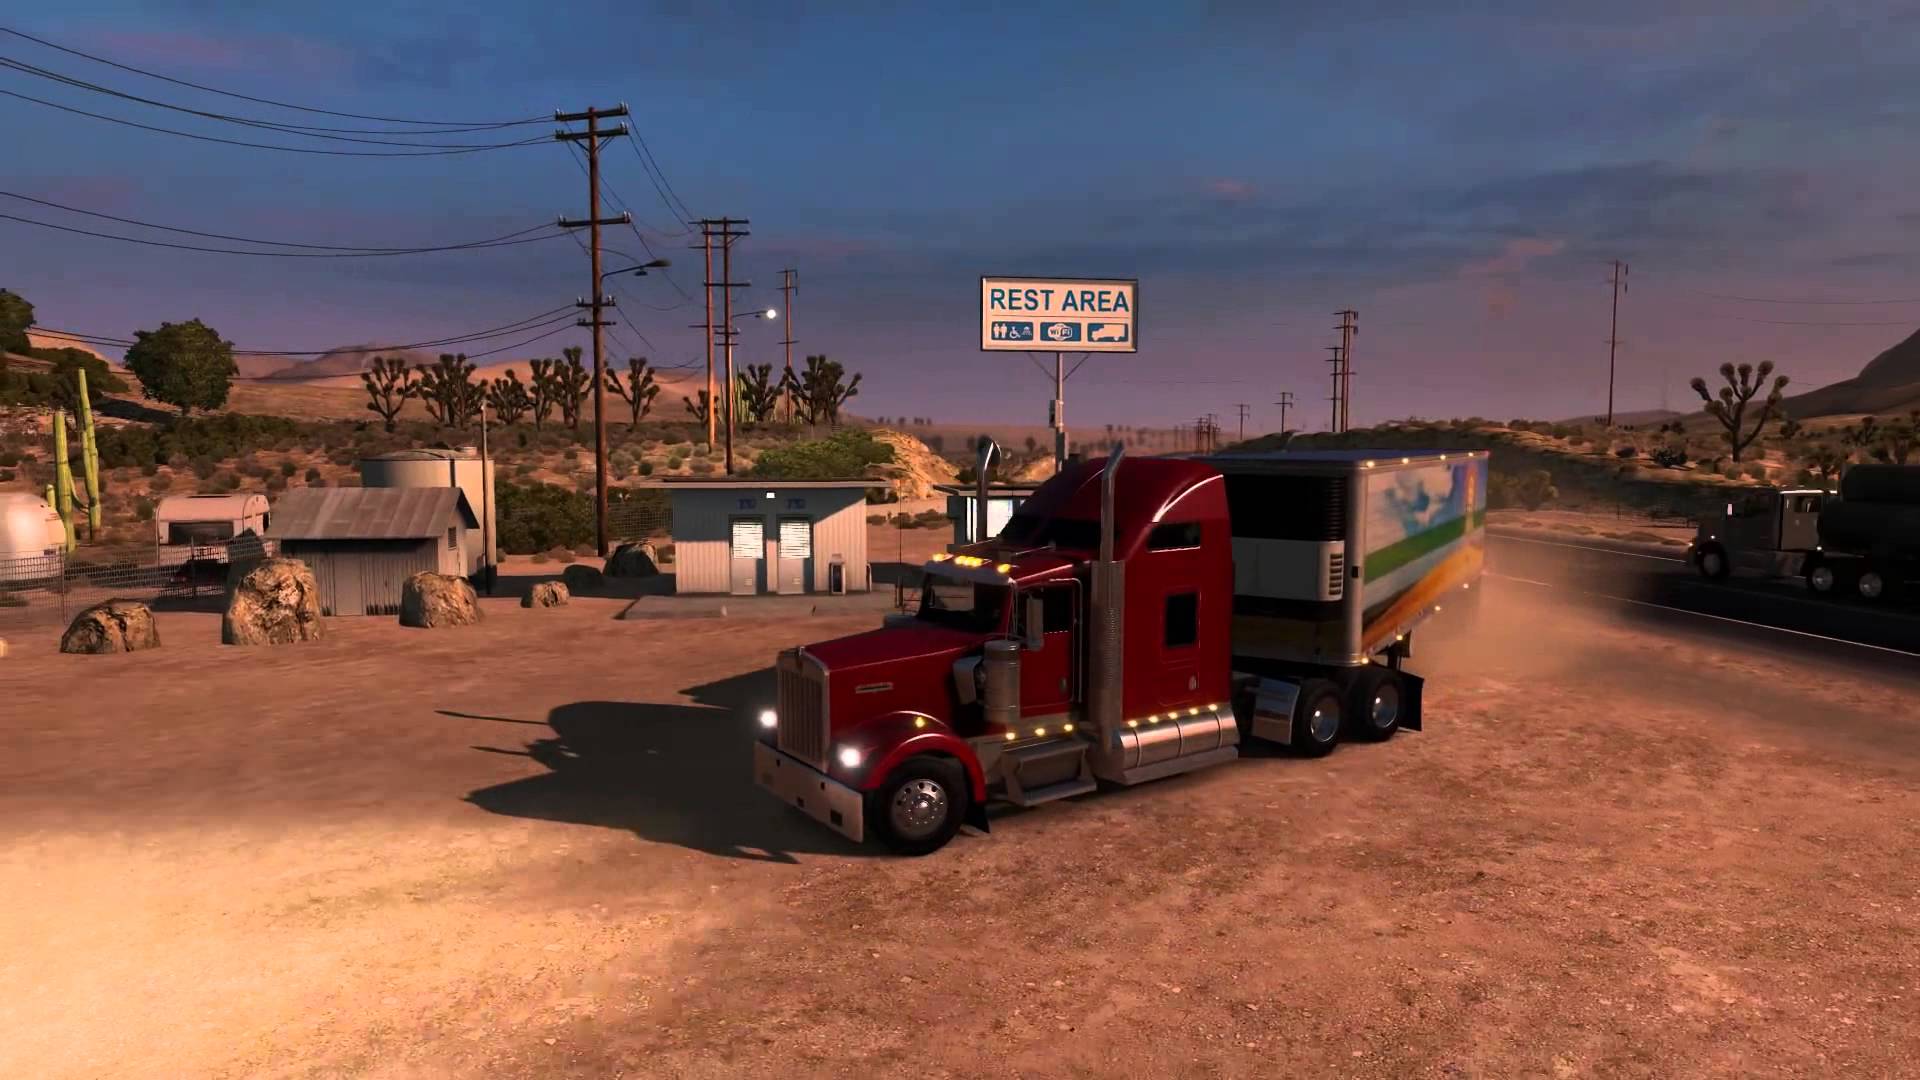 Inspiring American Truck Simulator Gameplay video!